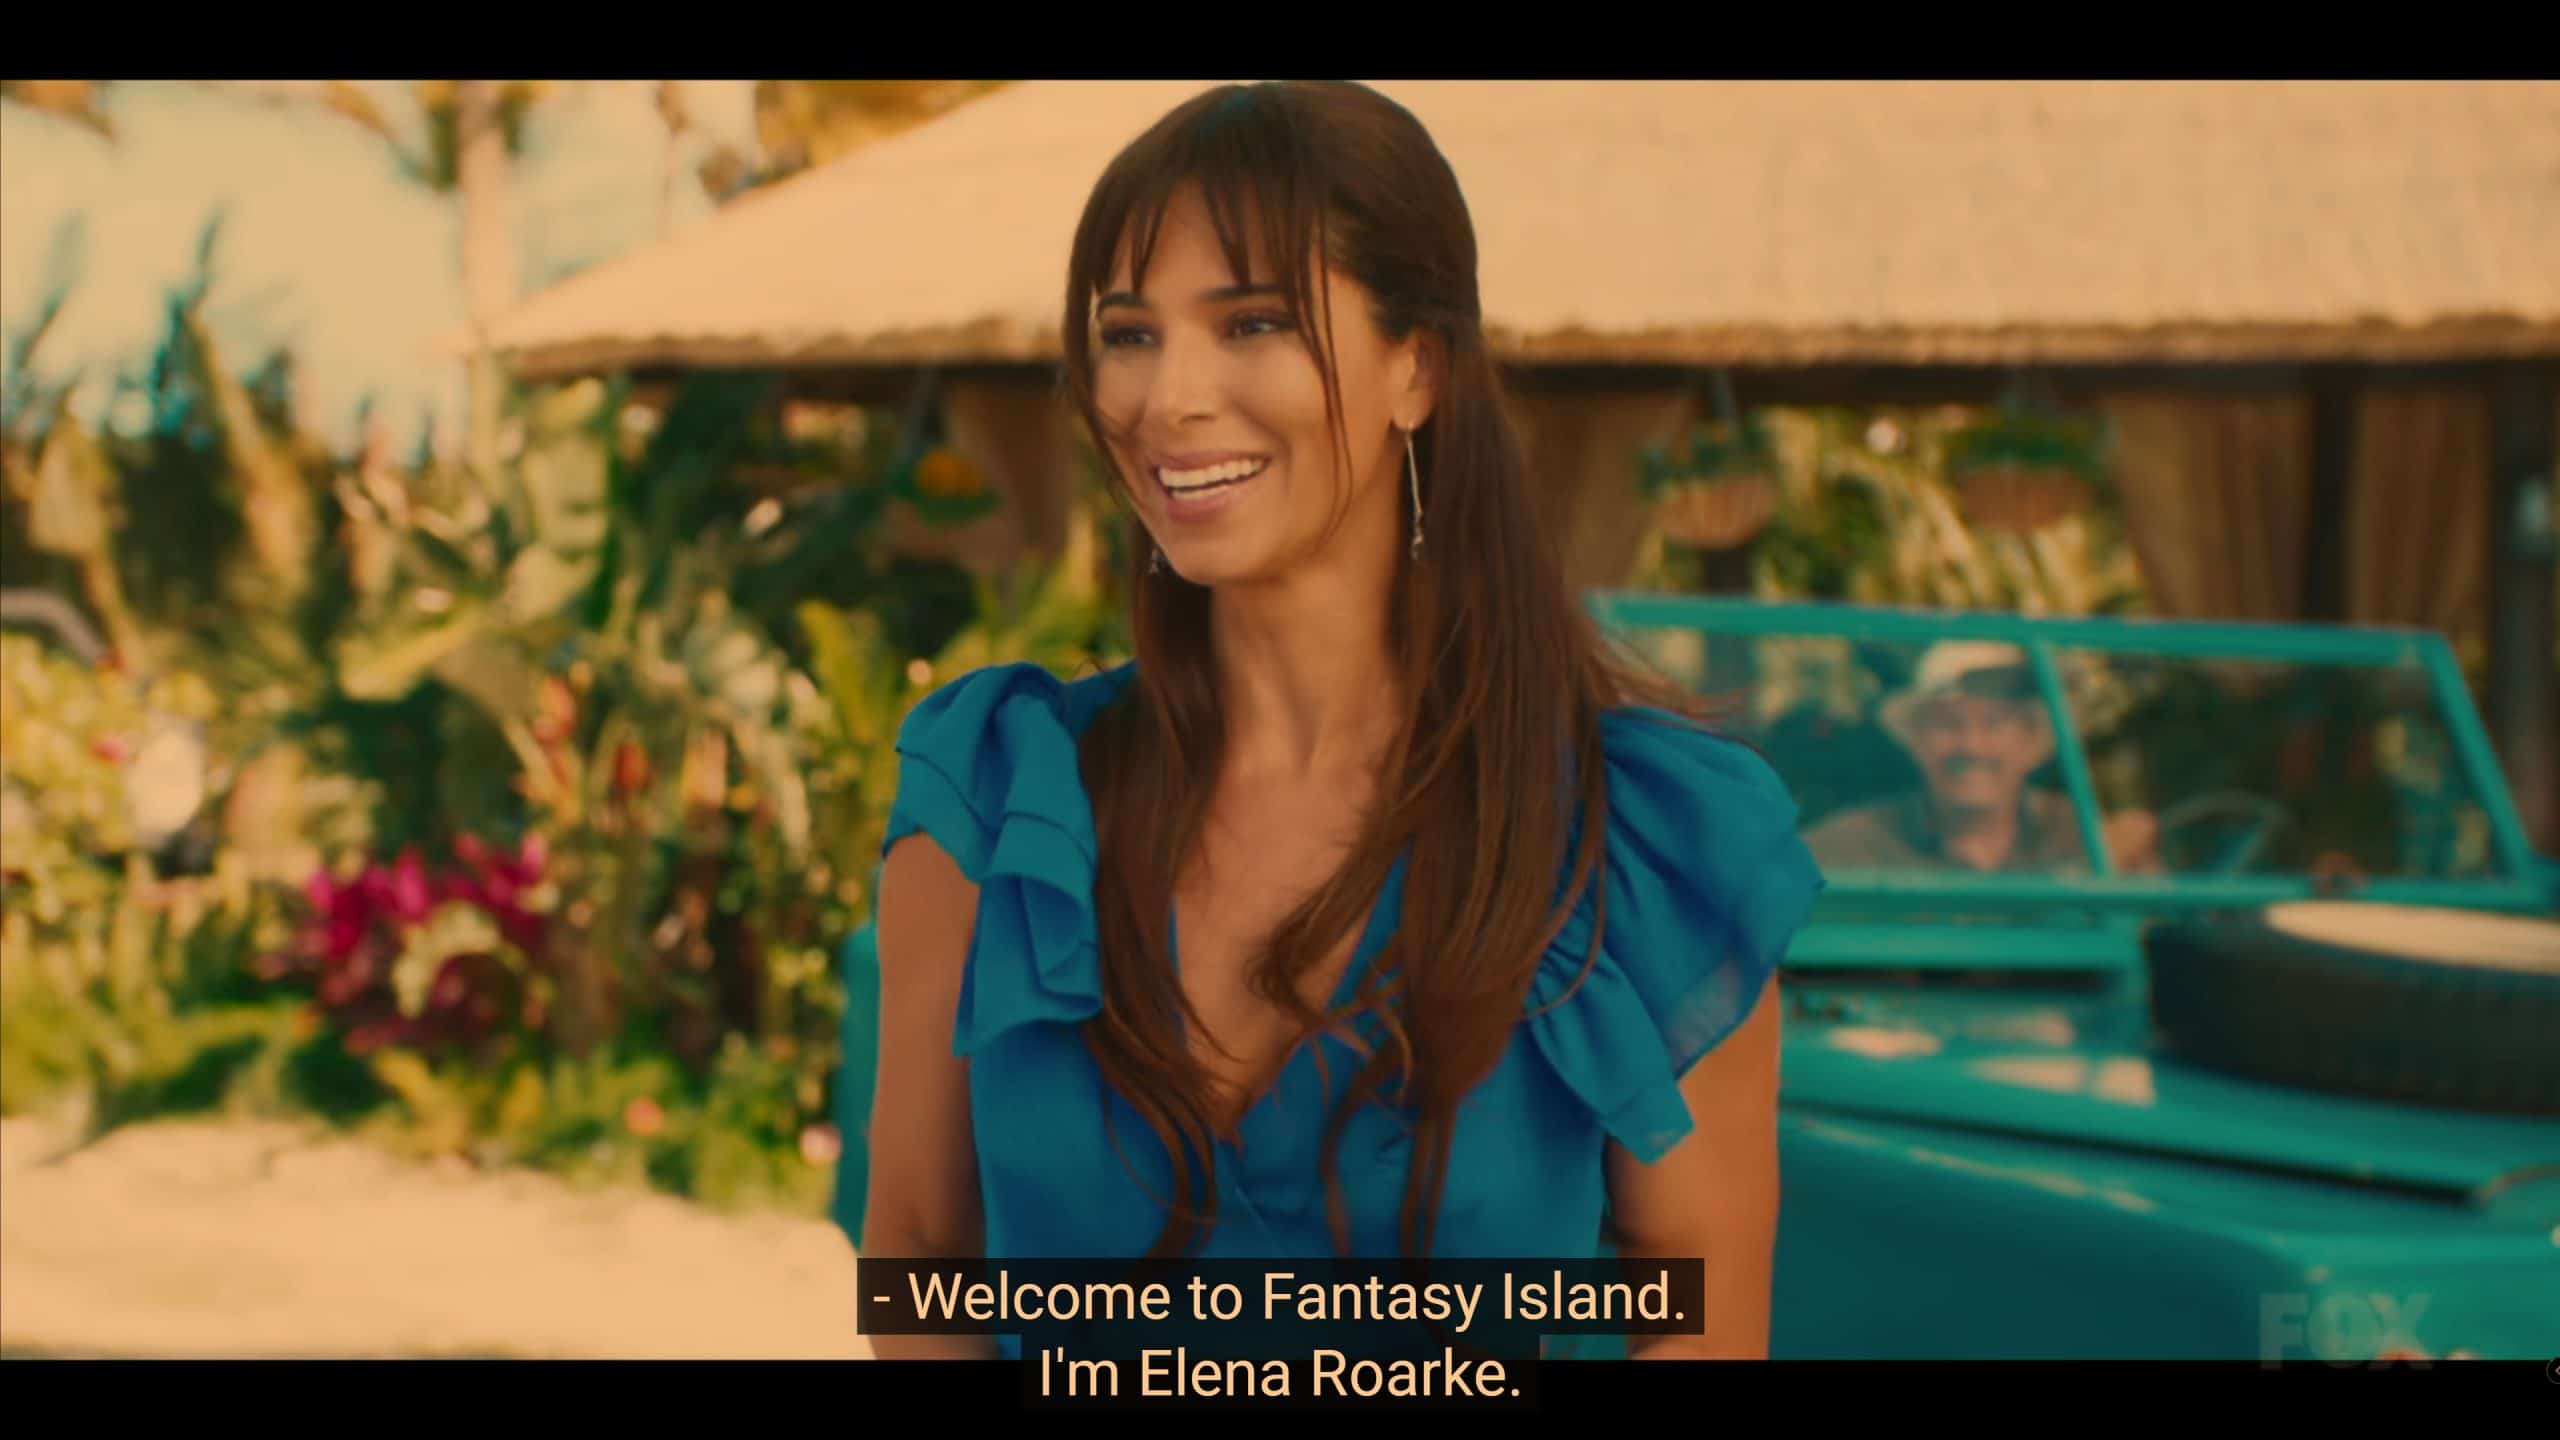 Roselyn Sanchez as Elena welcoming Joy to Fantasy Island